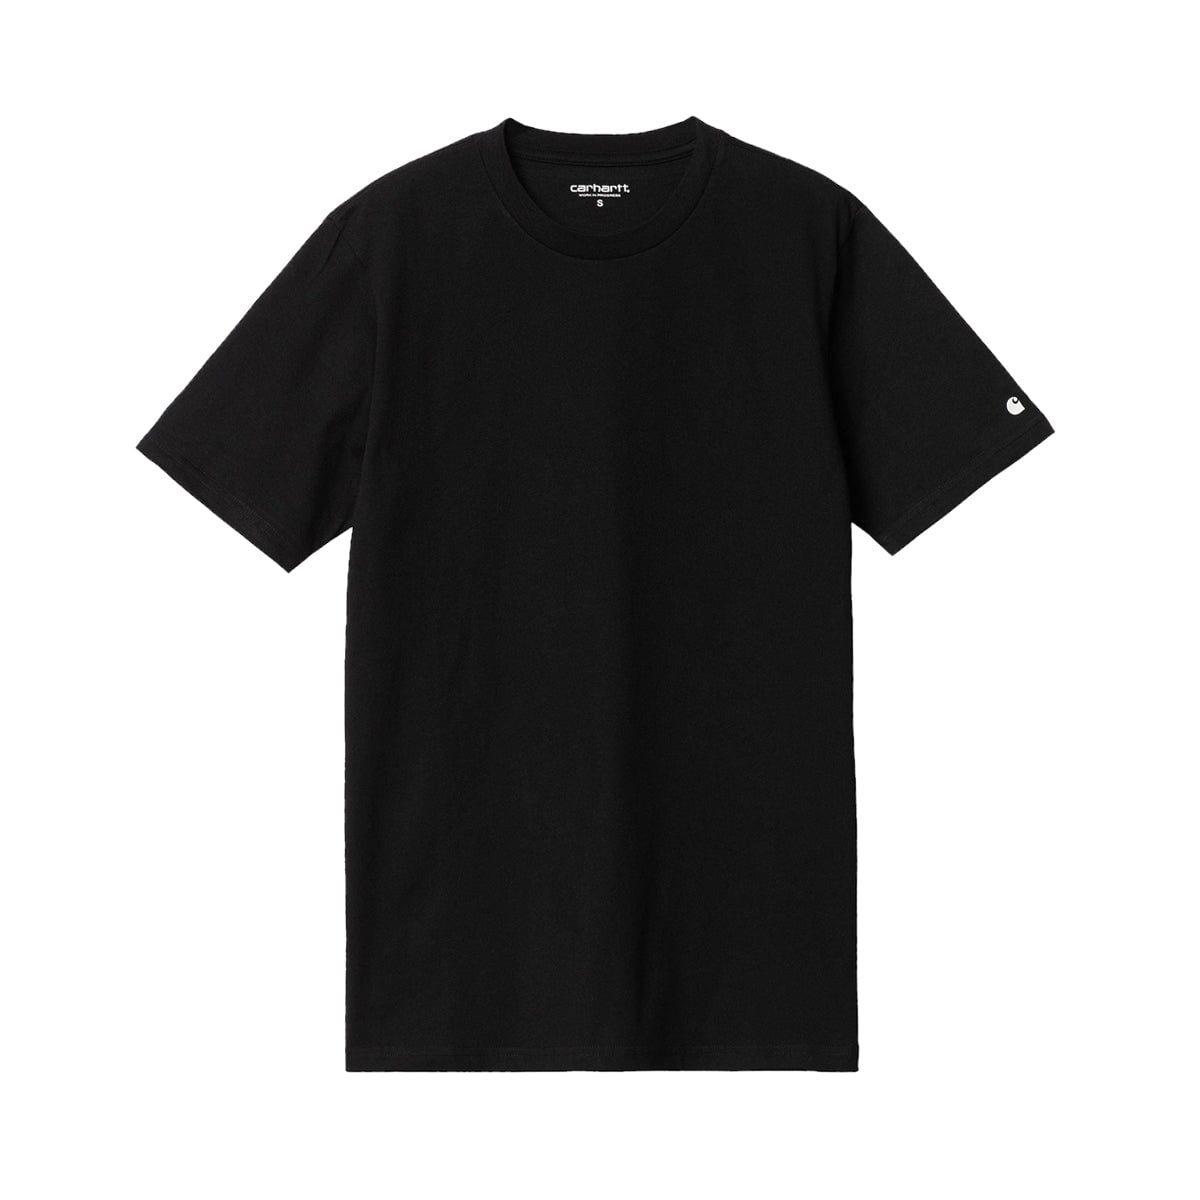 Carhartt WIP S-S Base T-Shirt - Black-White T-Shirt Carhartt WIP 